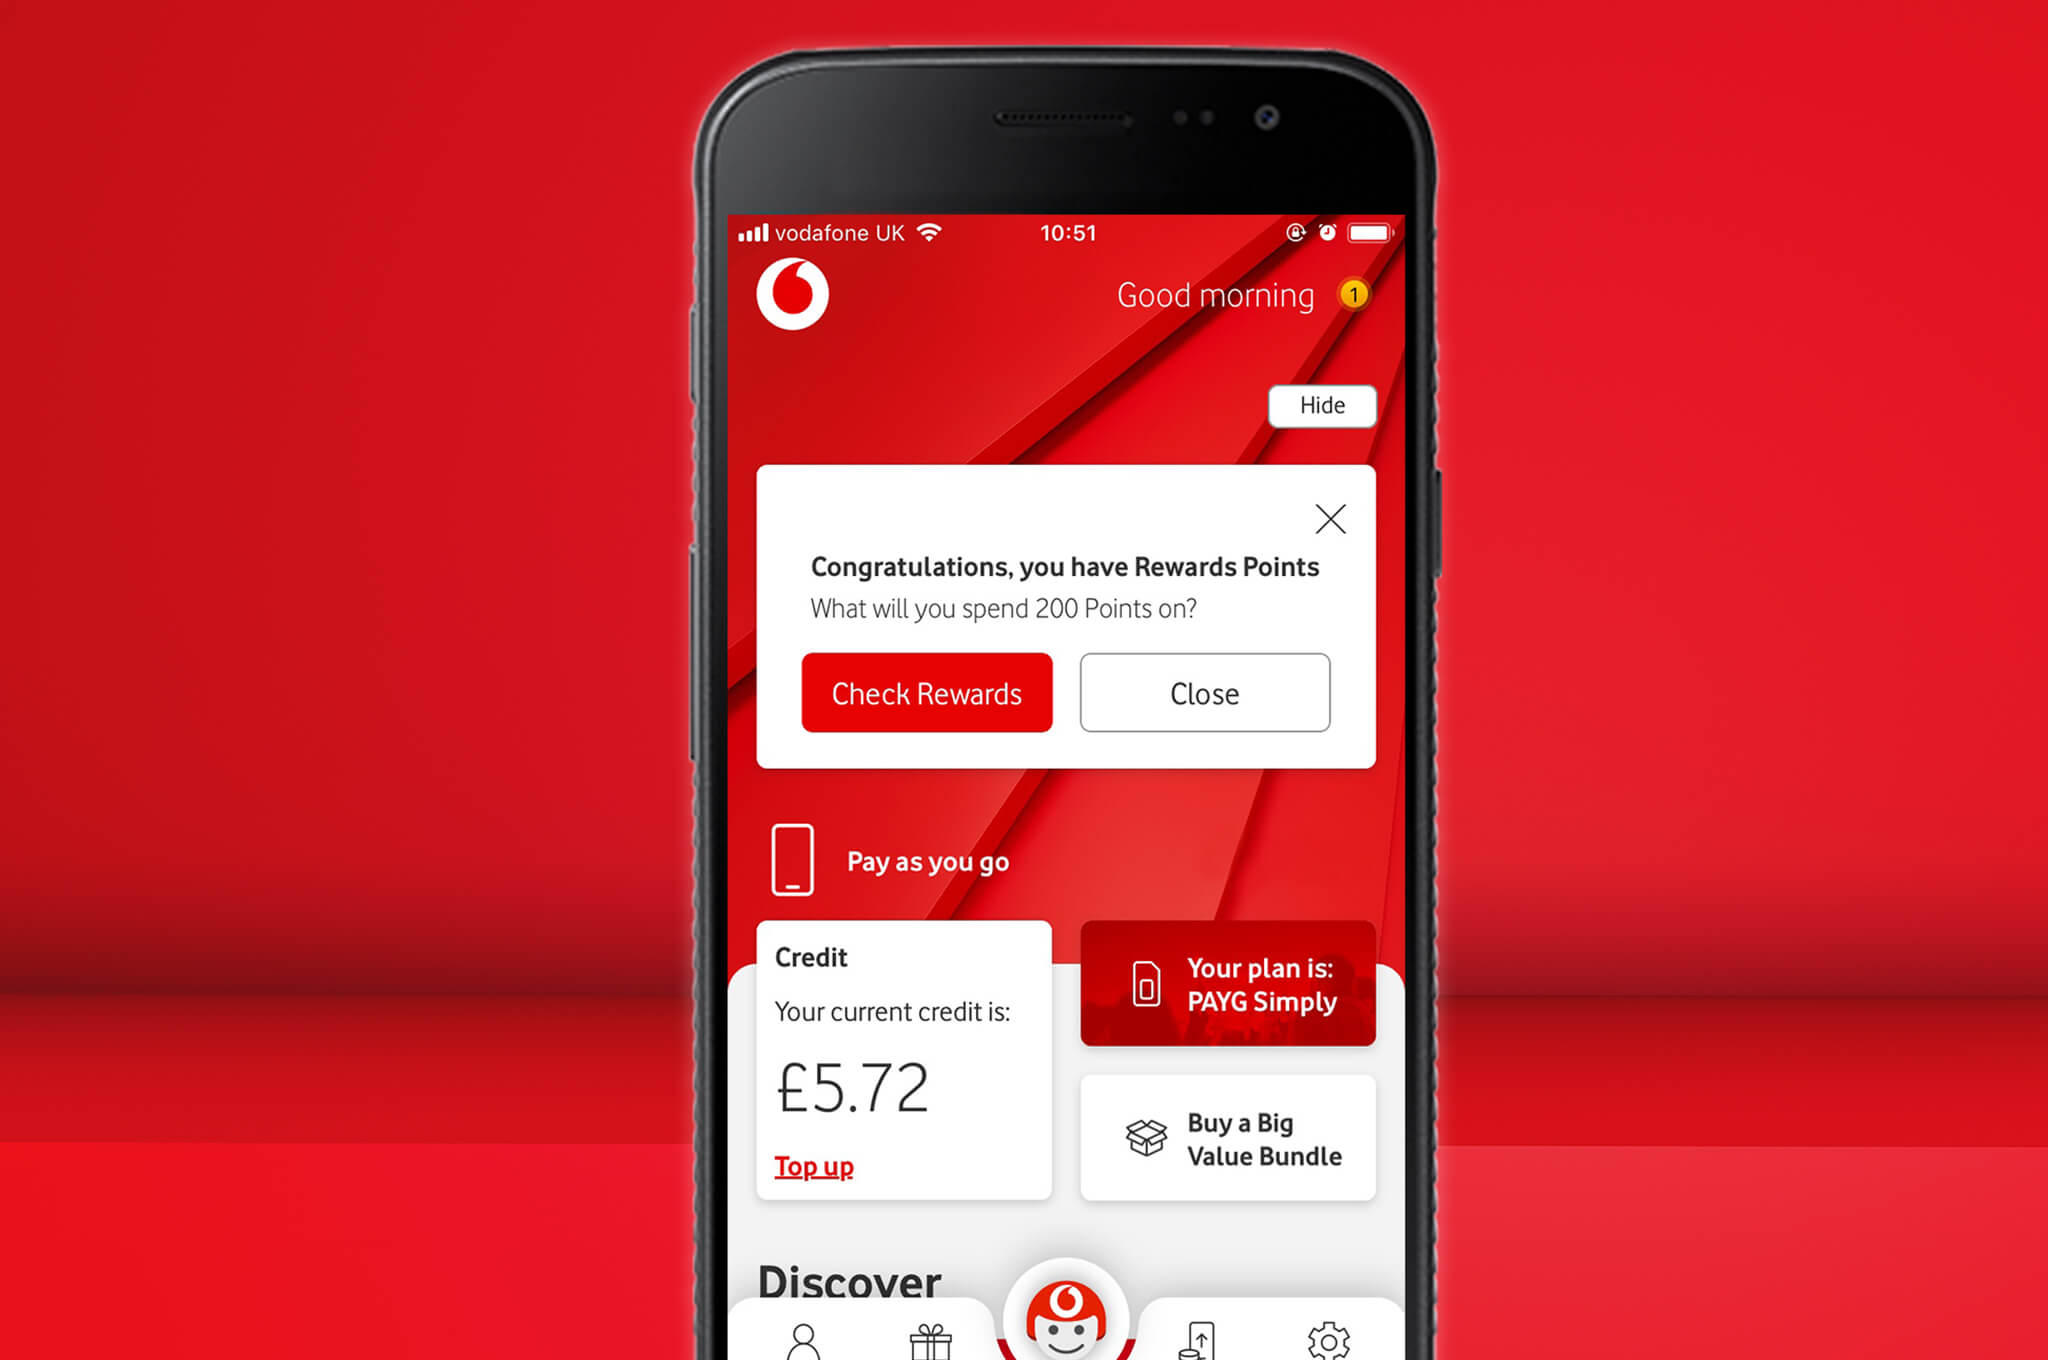 £15 Vodafone UK Top-ups £5 Mobile Phone Top-ups £20 Recharge Service £10 